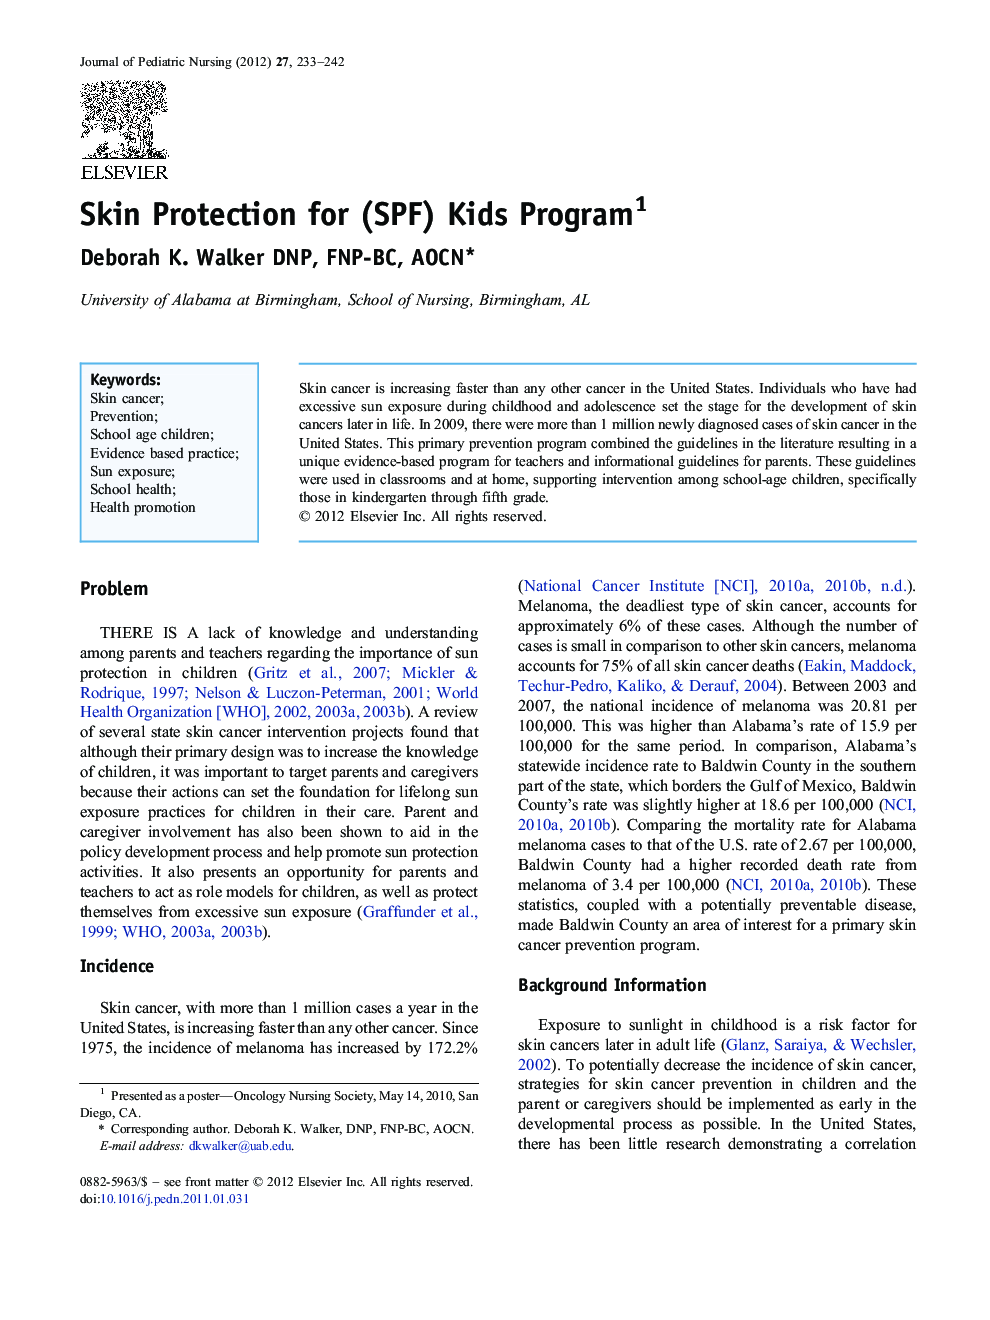 Skin Protection for (SPF) Kids Program 1